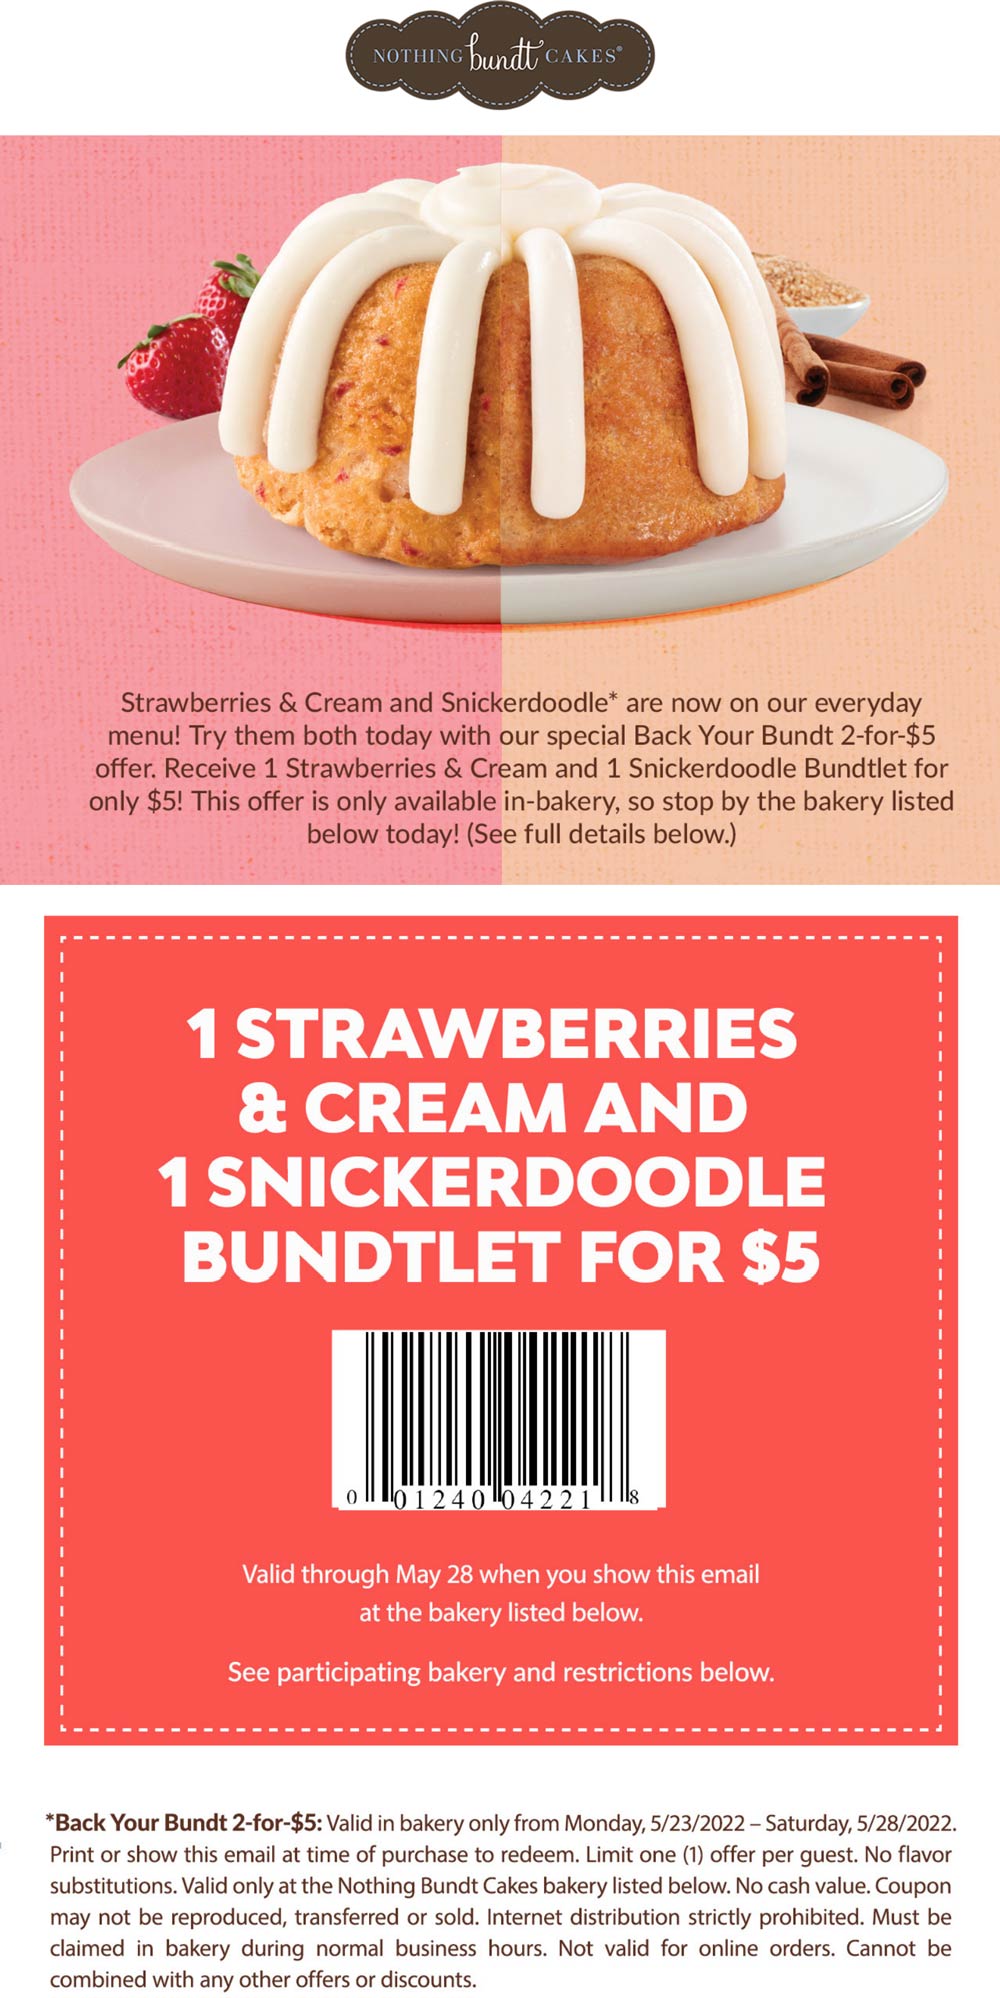 Strawberries & cream + Snickerdoodle dessert cakes = 5 at Nothing Bundt Cakes 